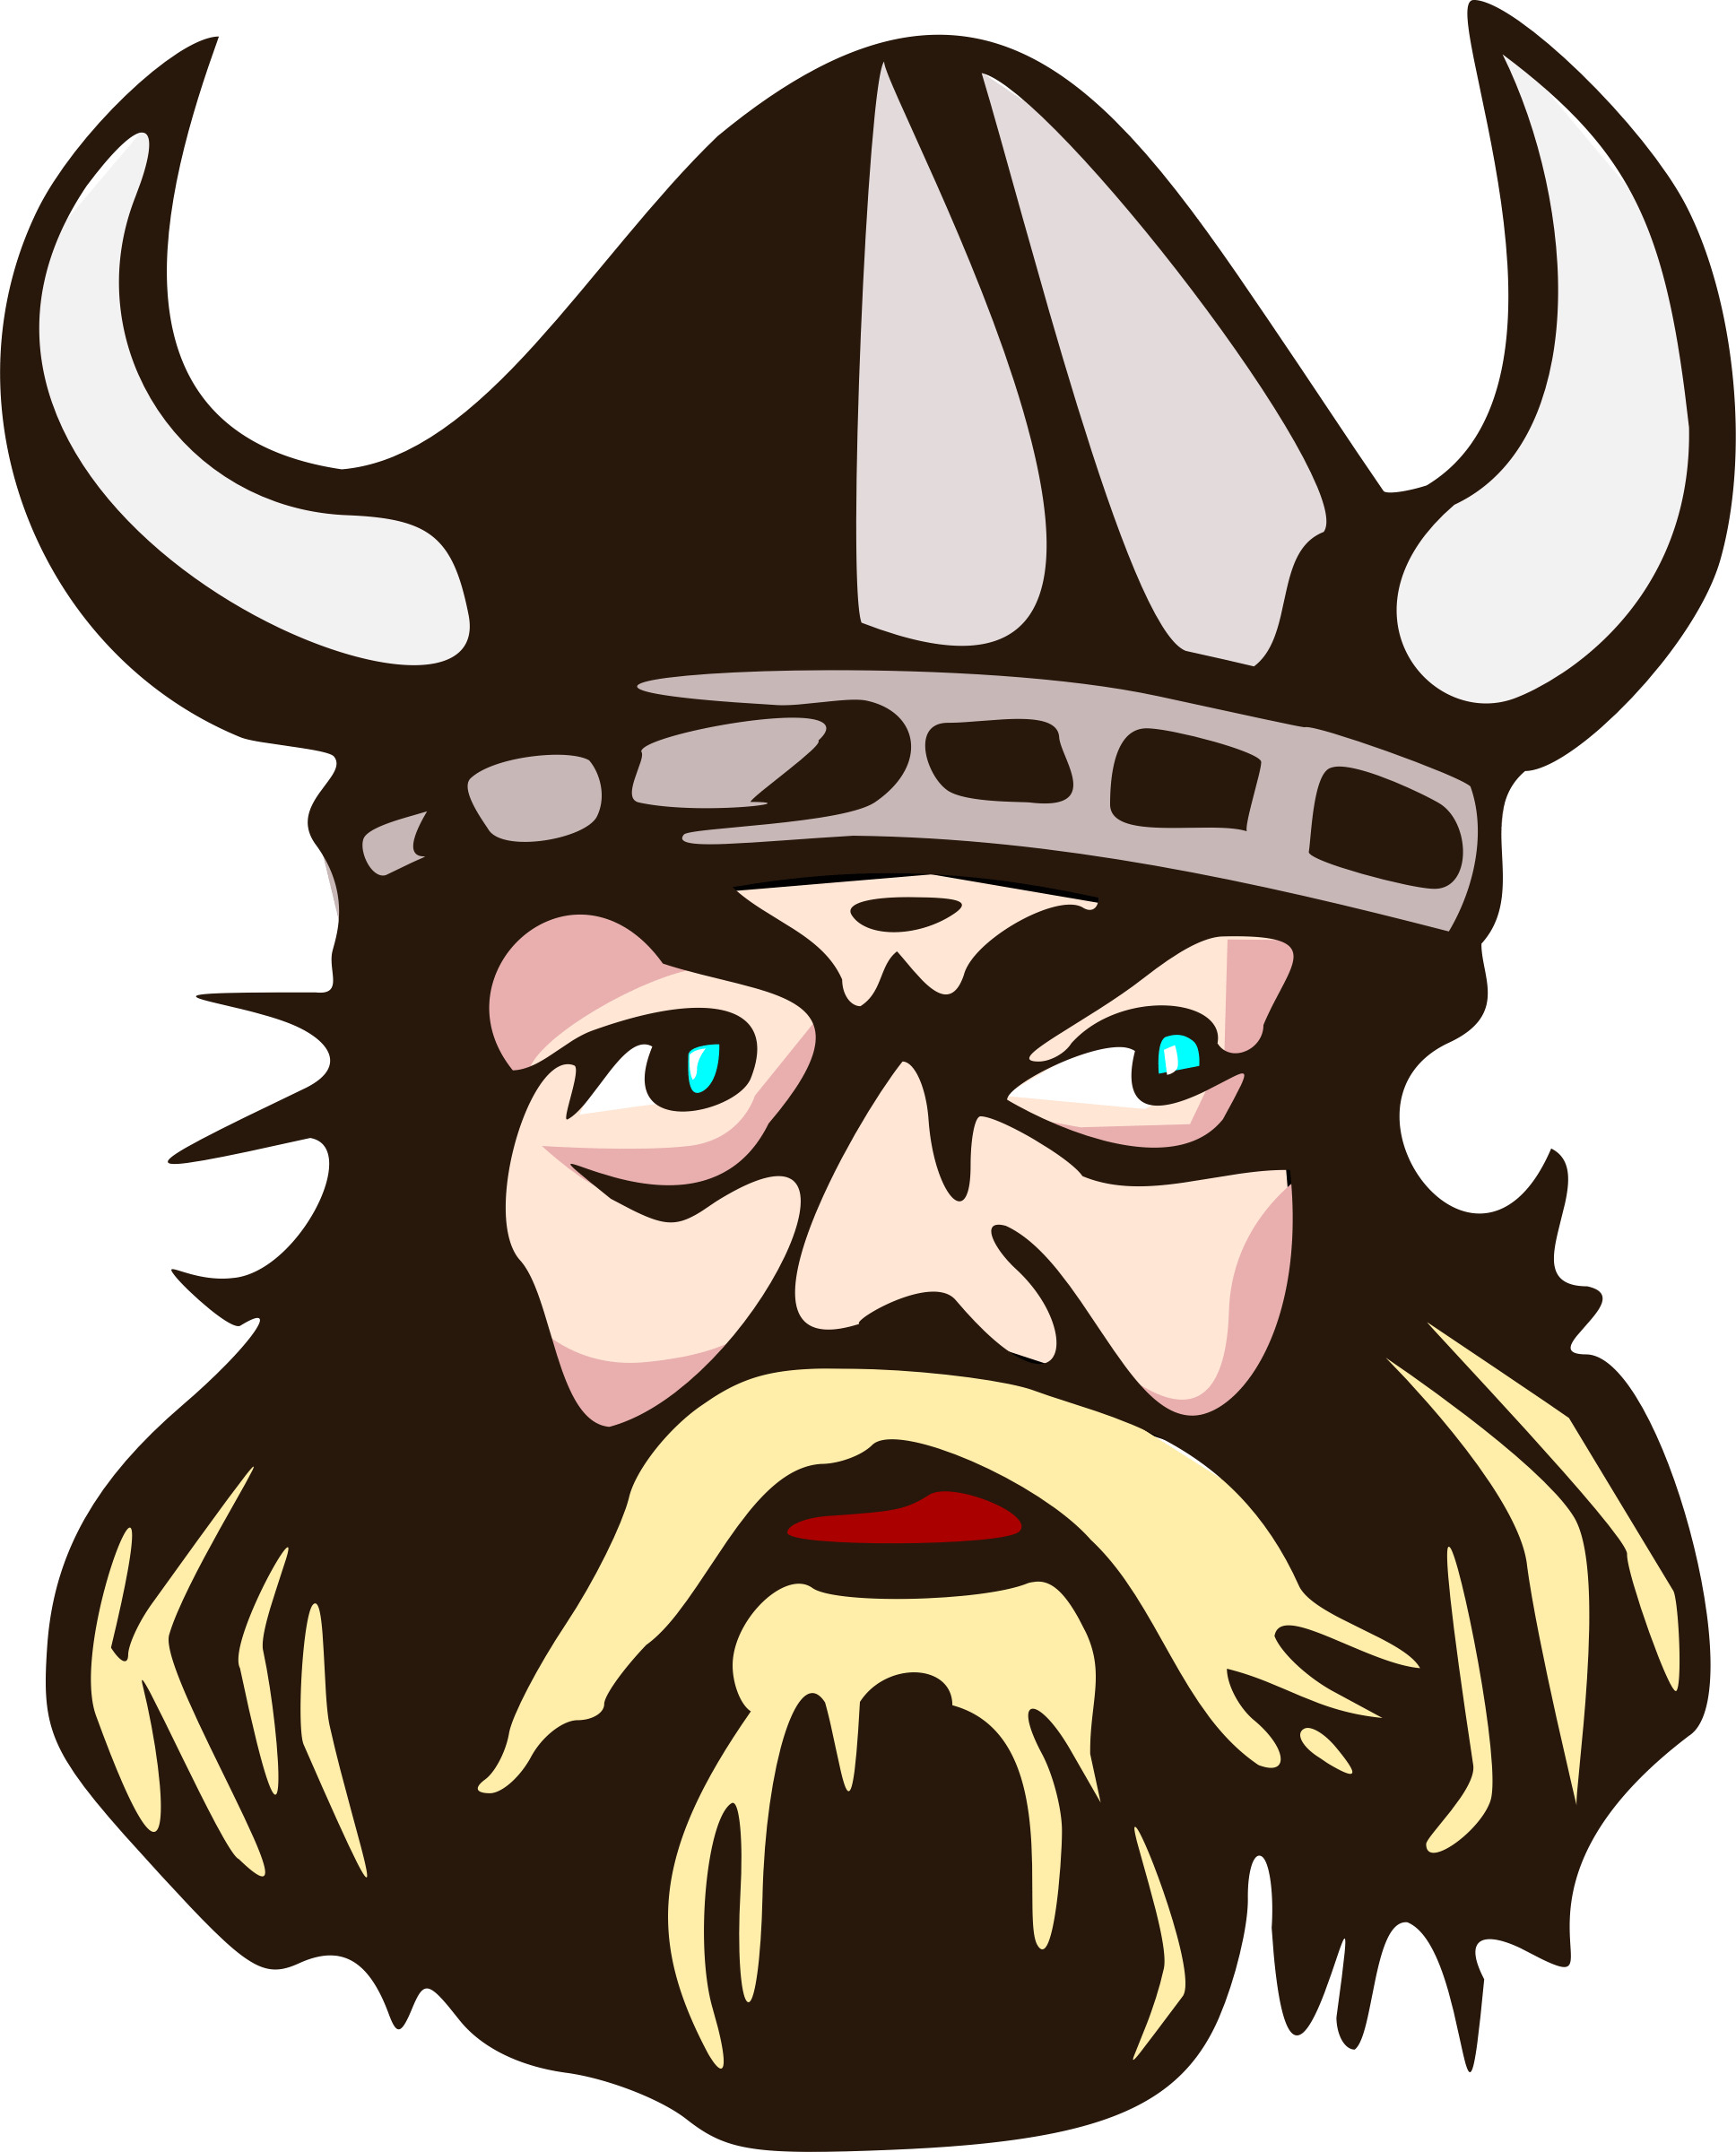 Viking Man Illustration icons